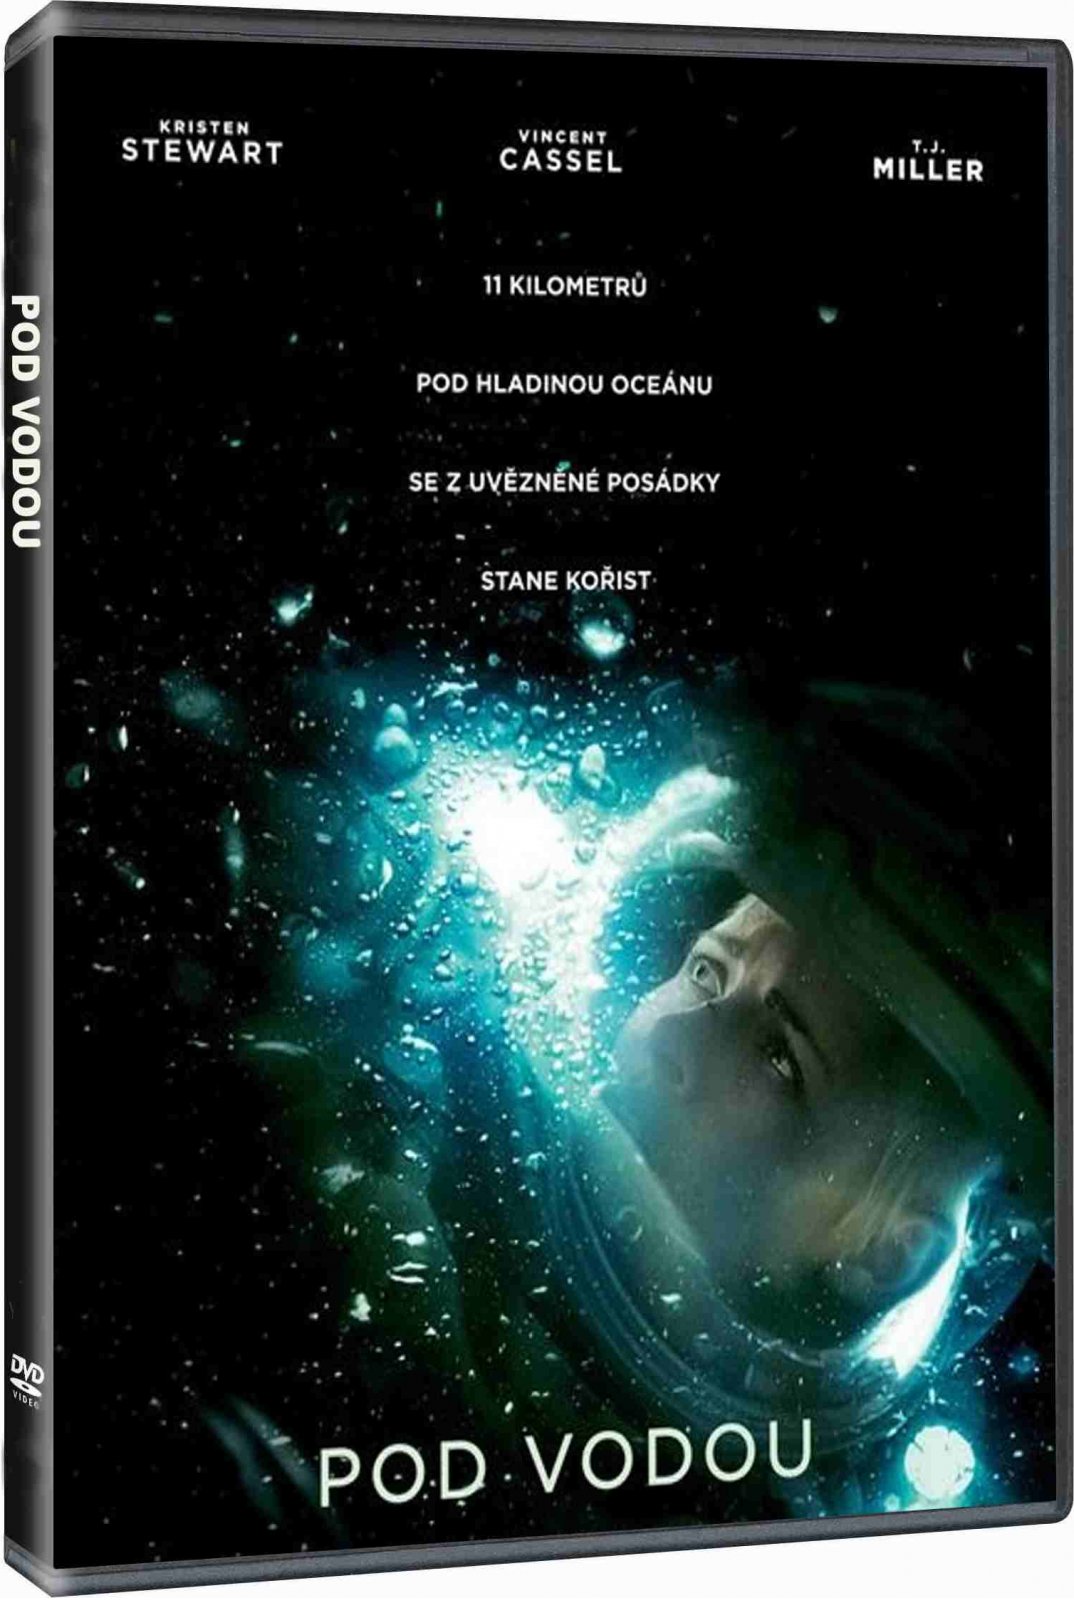 Stiahni si Filmy DVD Pod vodou / Underwater (2020)(CZ) = CSFD 57%